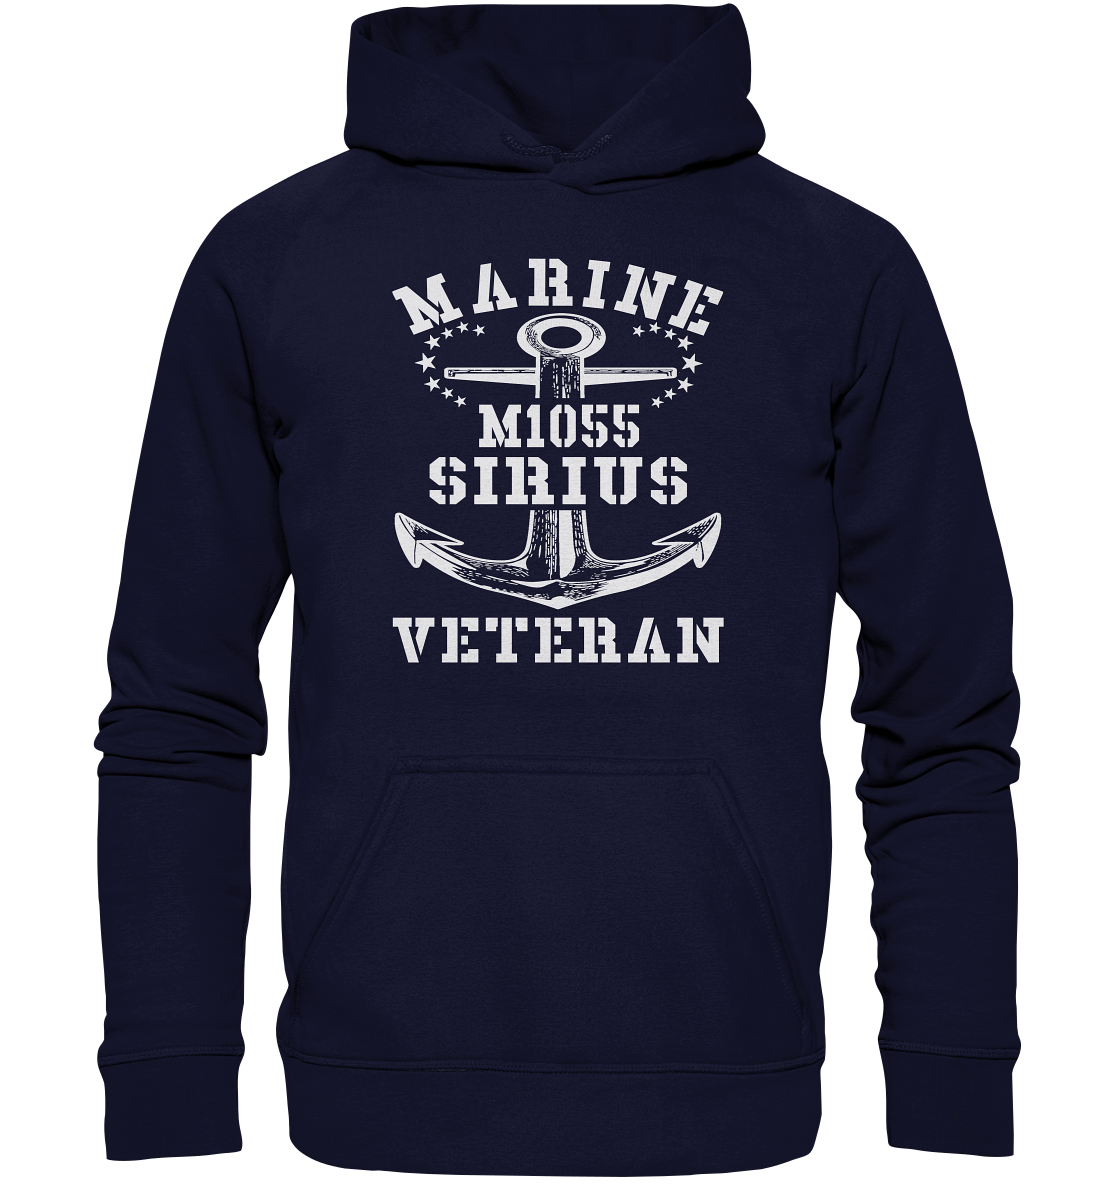 SM-Boot M1055 SIRIUS Marine Veteran - Basic Unisex Hoodie XL